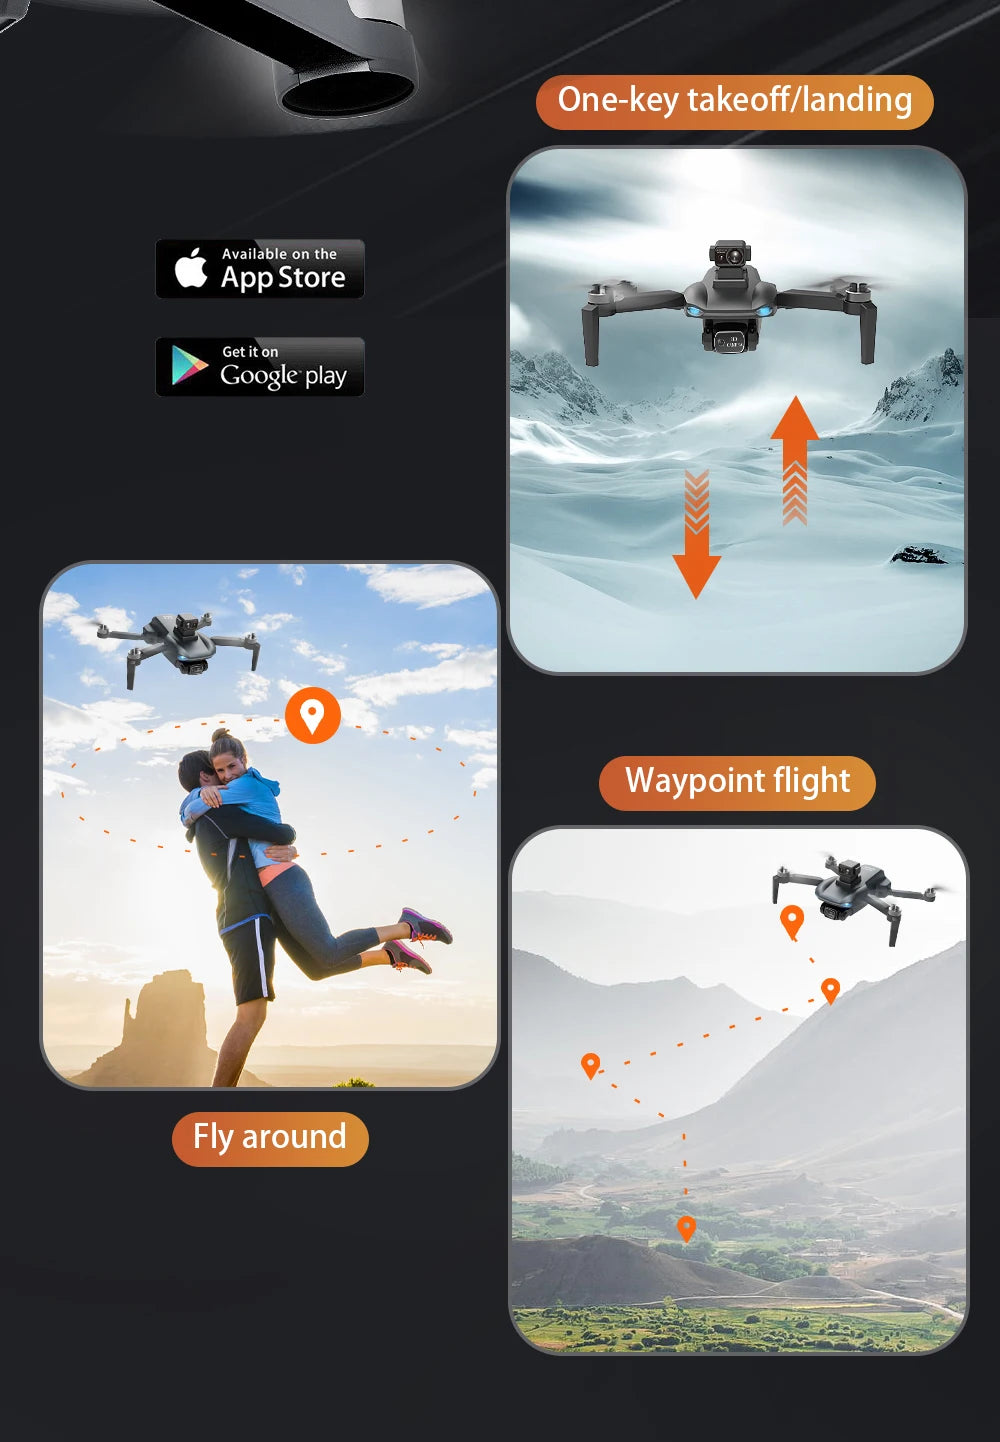 SG108 / SG108 Max Drone, Google play Waypoint flight around it available on the App Store Get Waypoint Flight around it on